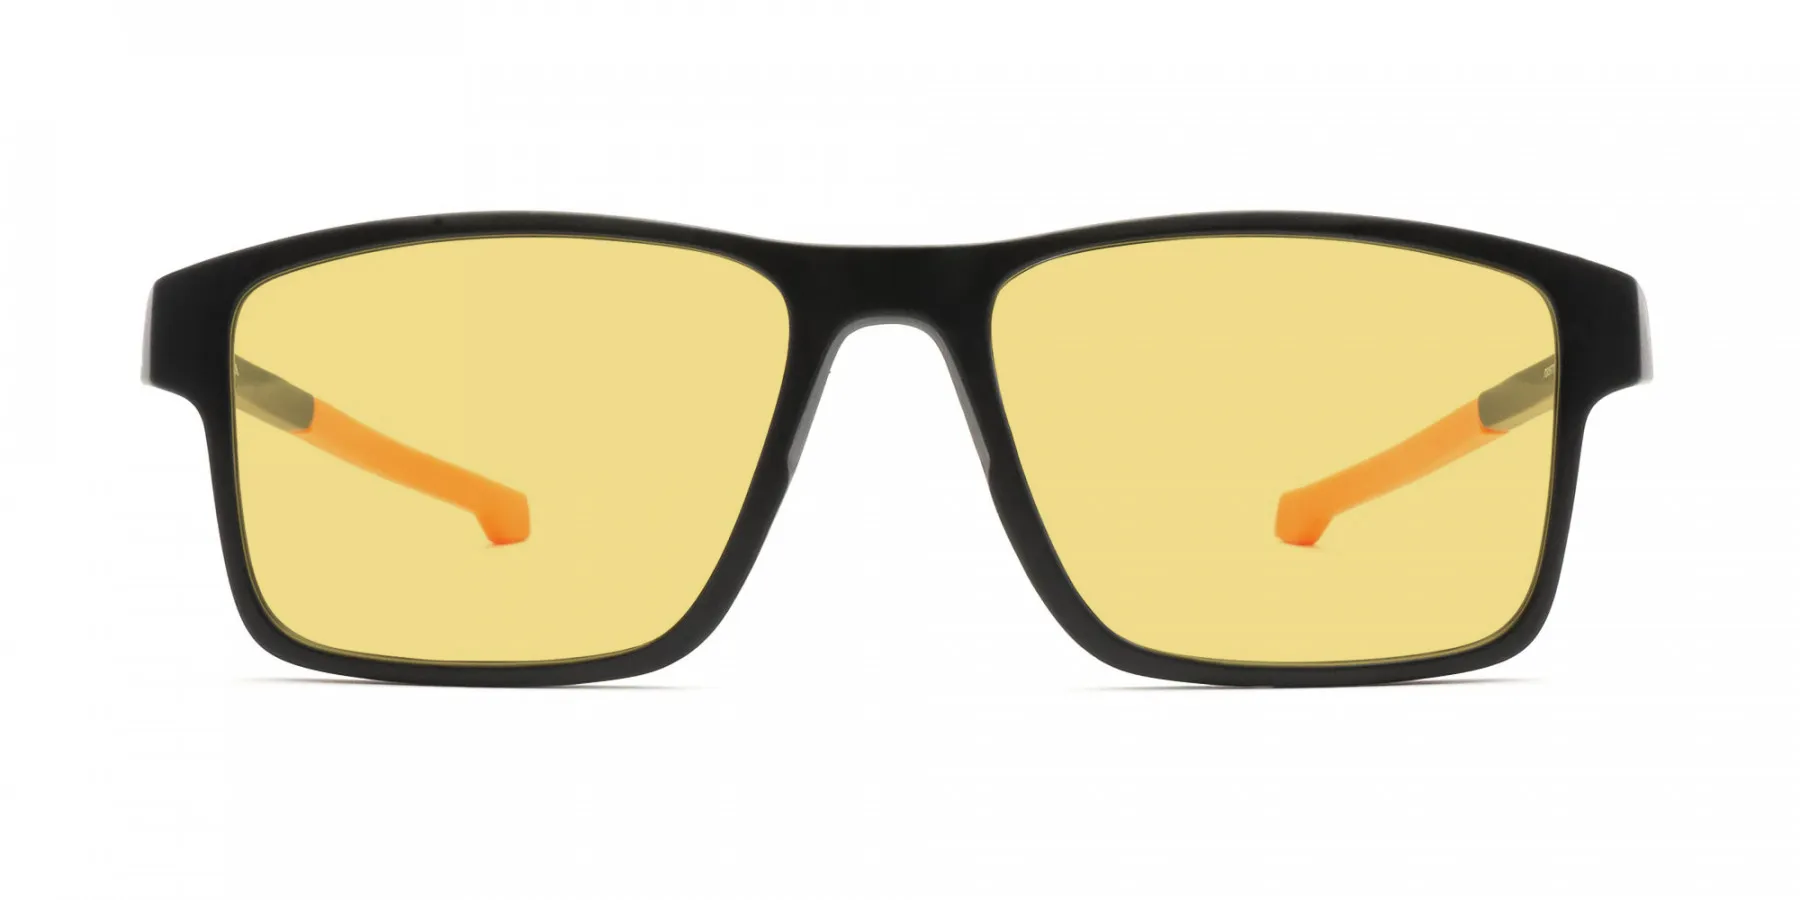 Rectangular Sports Sunglasses With Yellow Tint